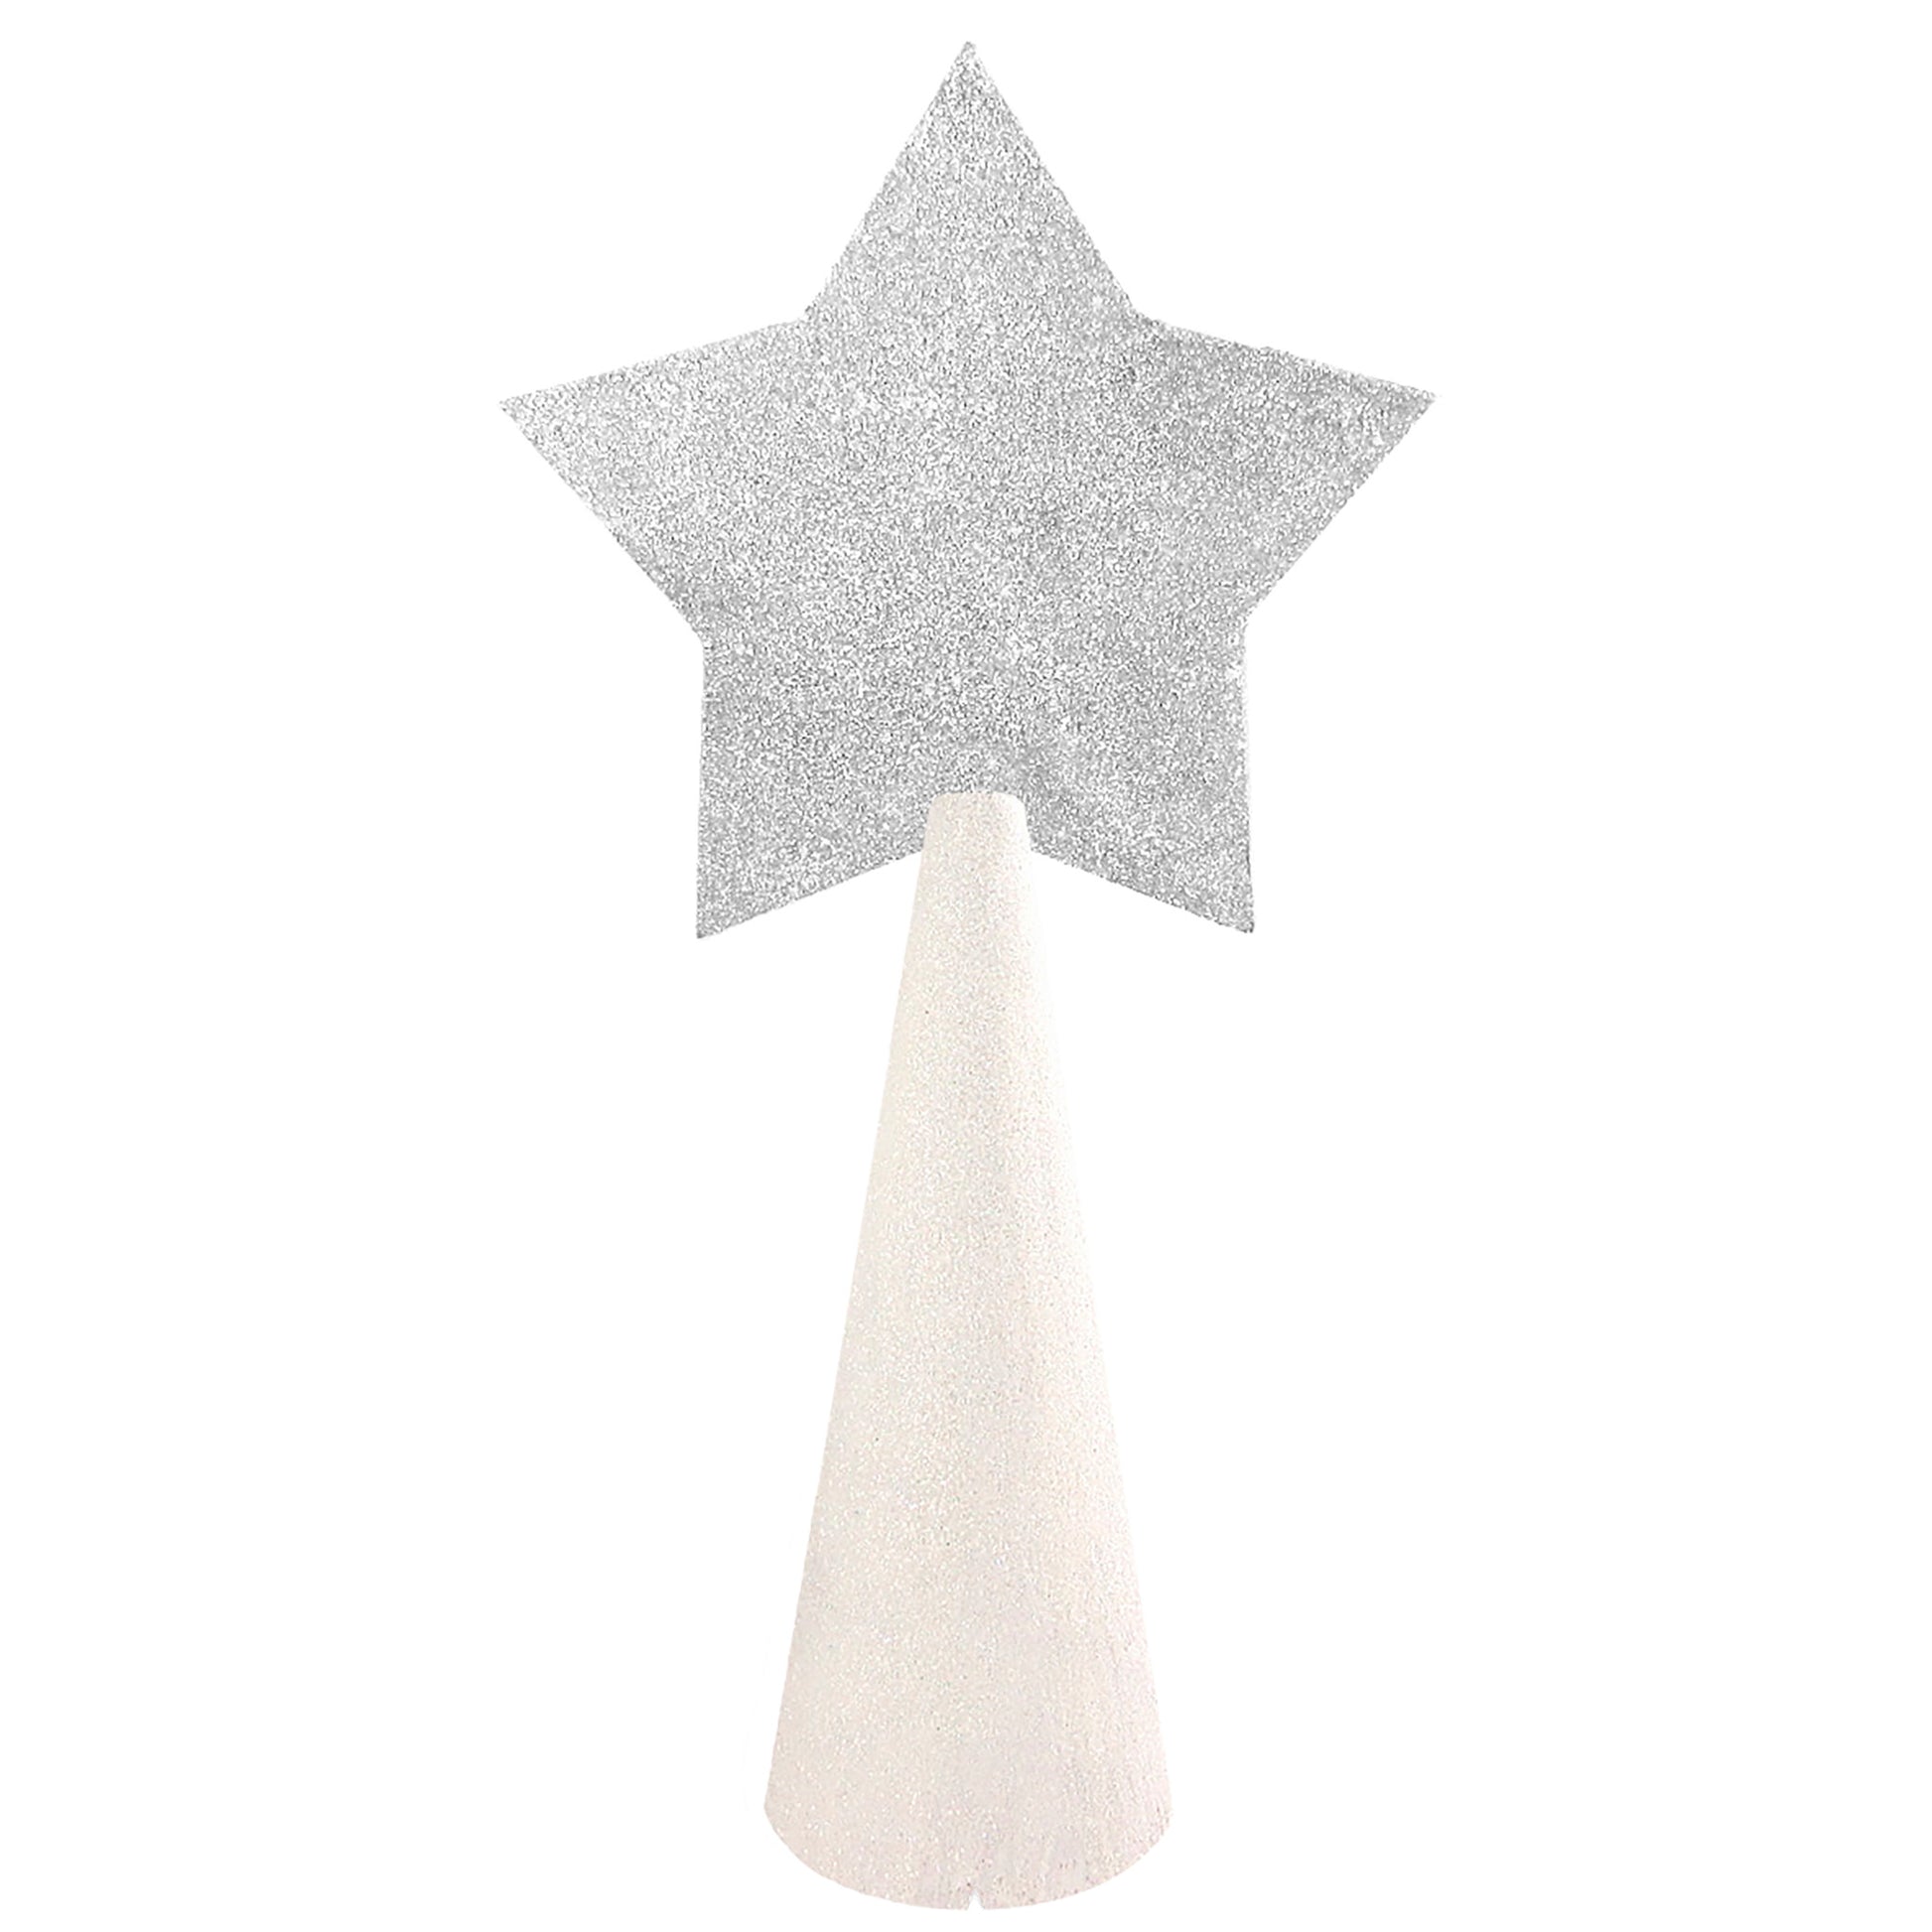 warm white glitter cone, silver glitter star - back of custom tree topper